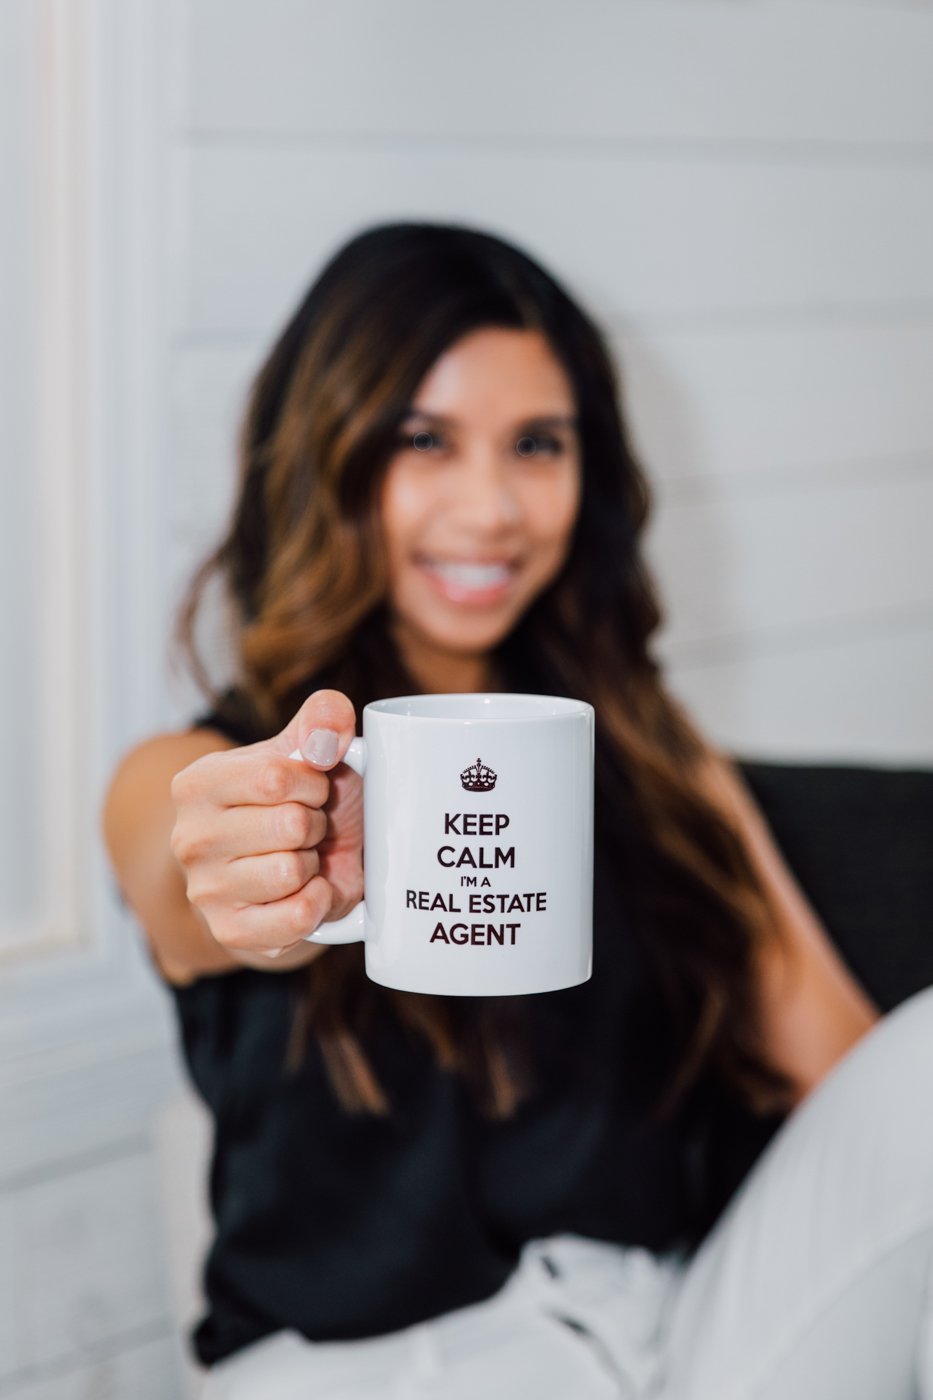  Kawela Home Team realtor holding a mug that says "Keep Calm I'm a Real Estate Agent" 